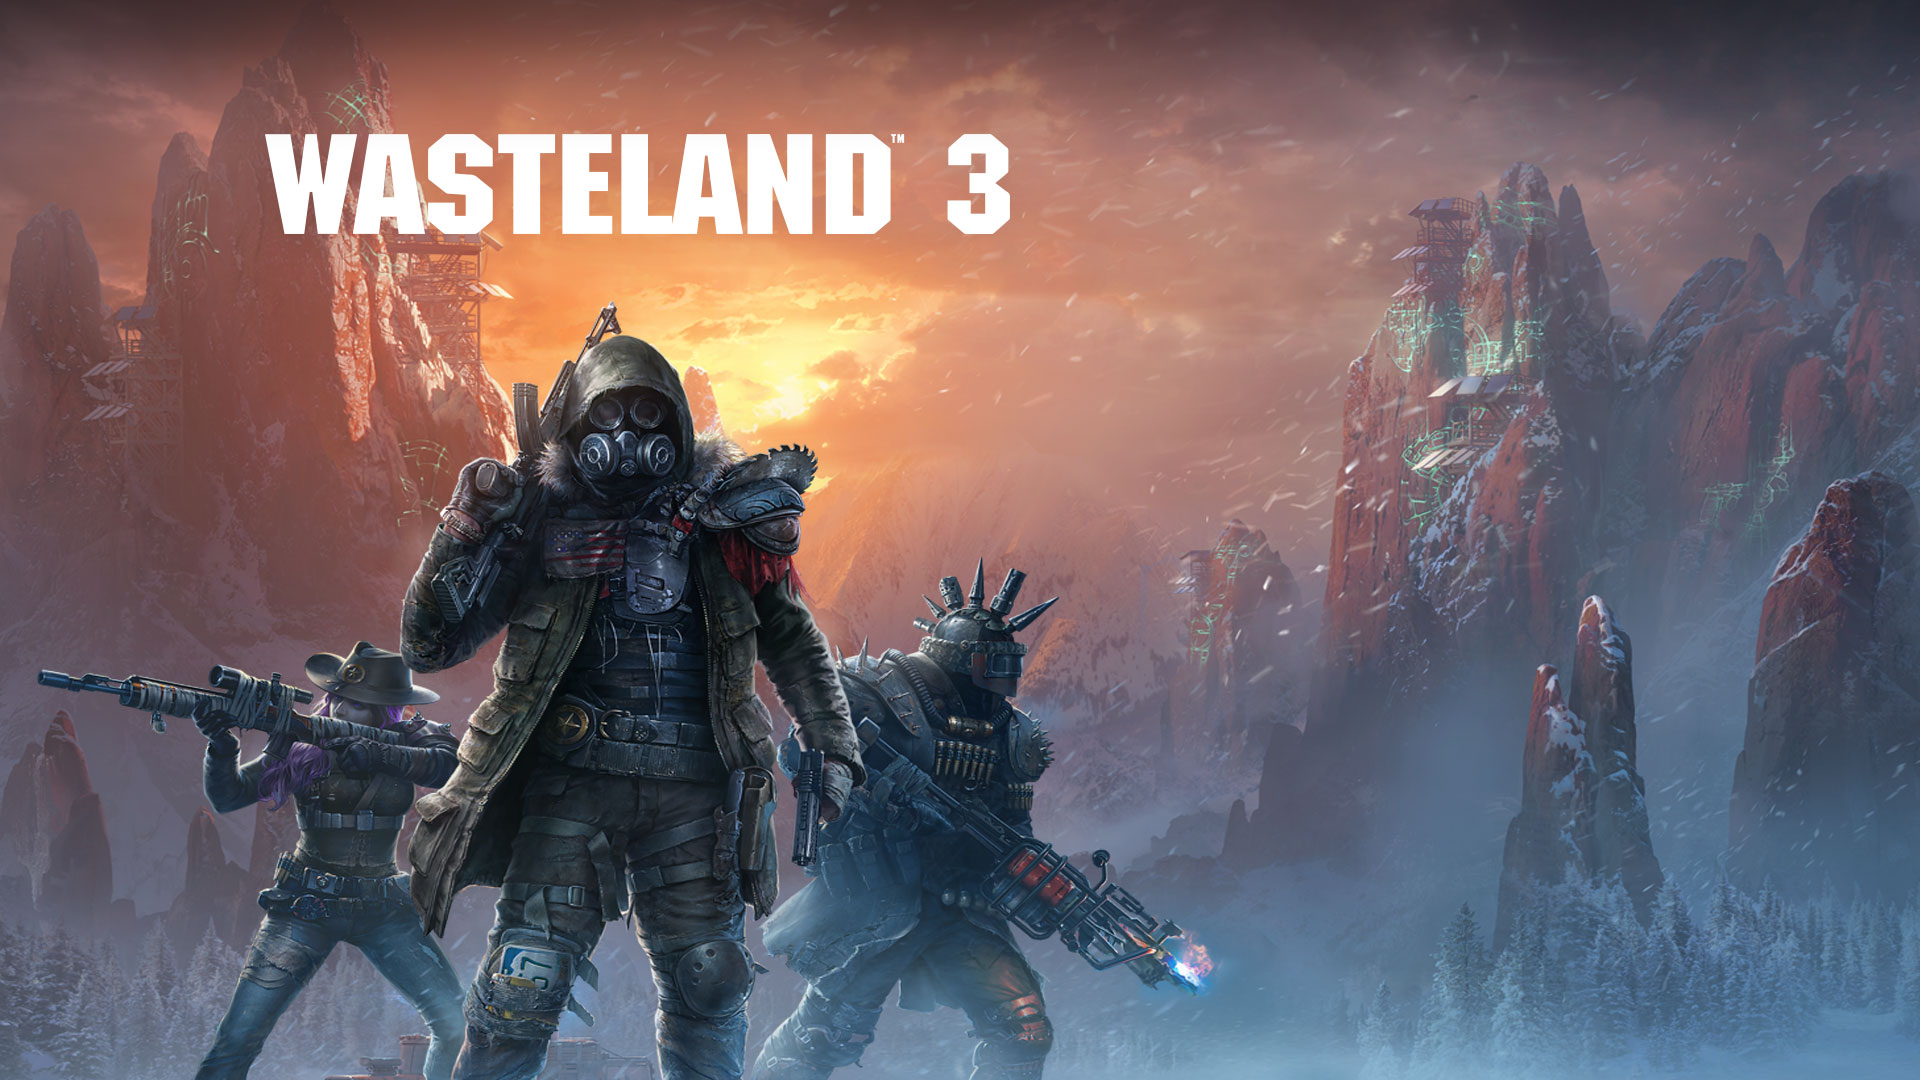 Wasteland 3, τρεις βαριά οπλισμένοι χαρακτήρες εν μέσω χιονοθύελλας που φορούν μάσκες αερίου